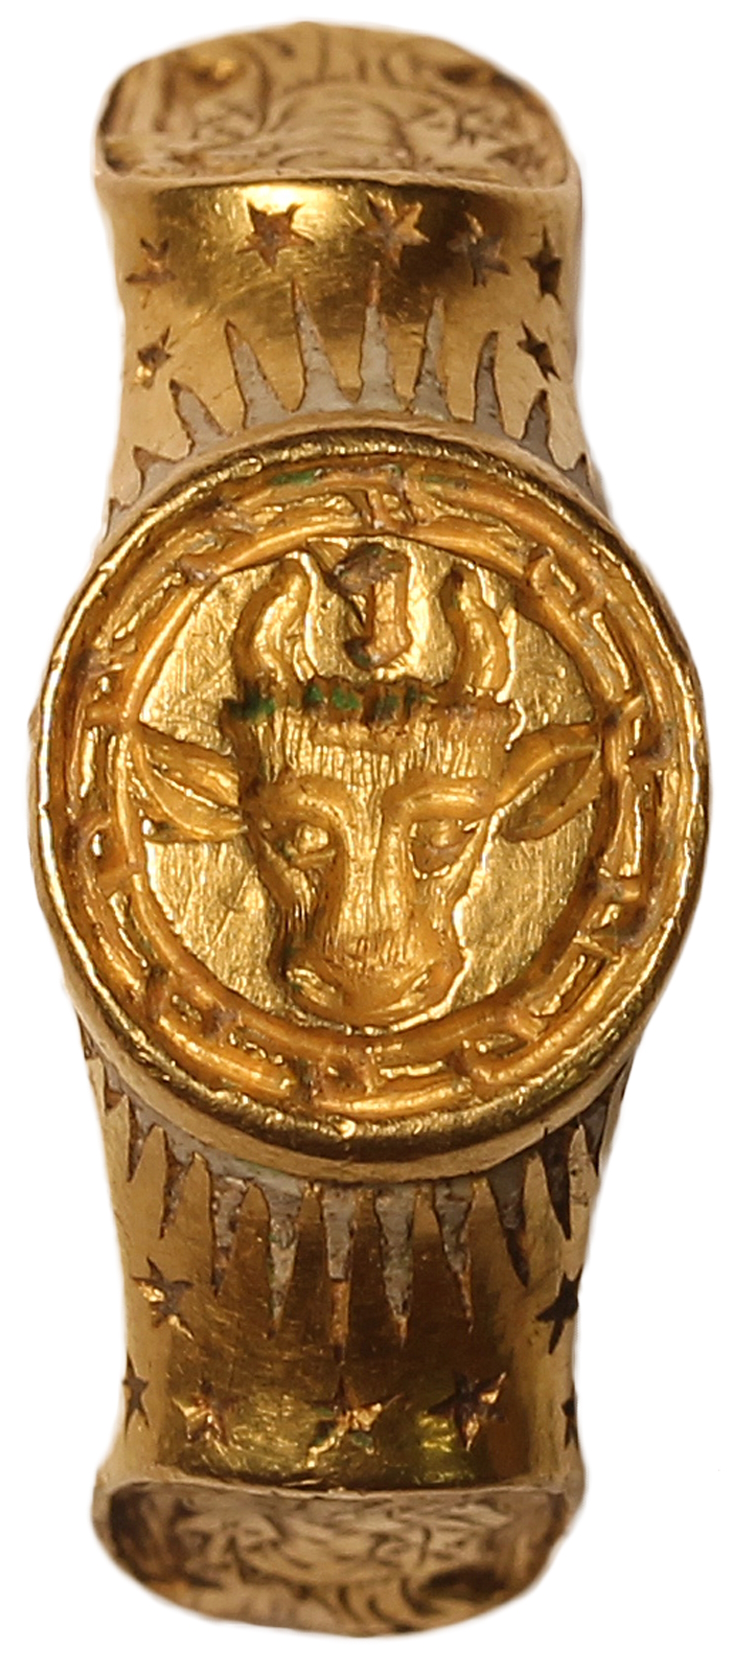 Detektorový nález zlatého prstenu Boleynových vystaven v síni královny Anny Boleynové